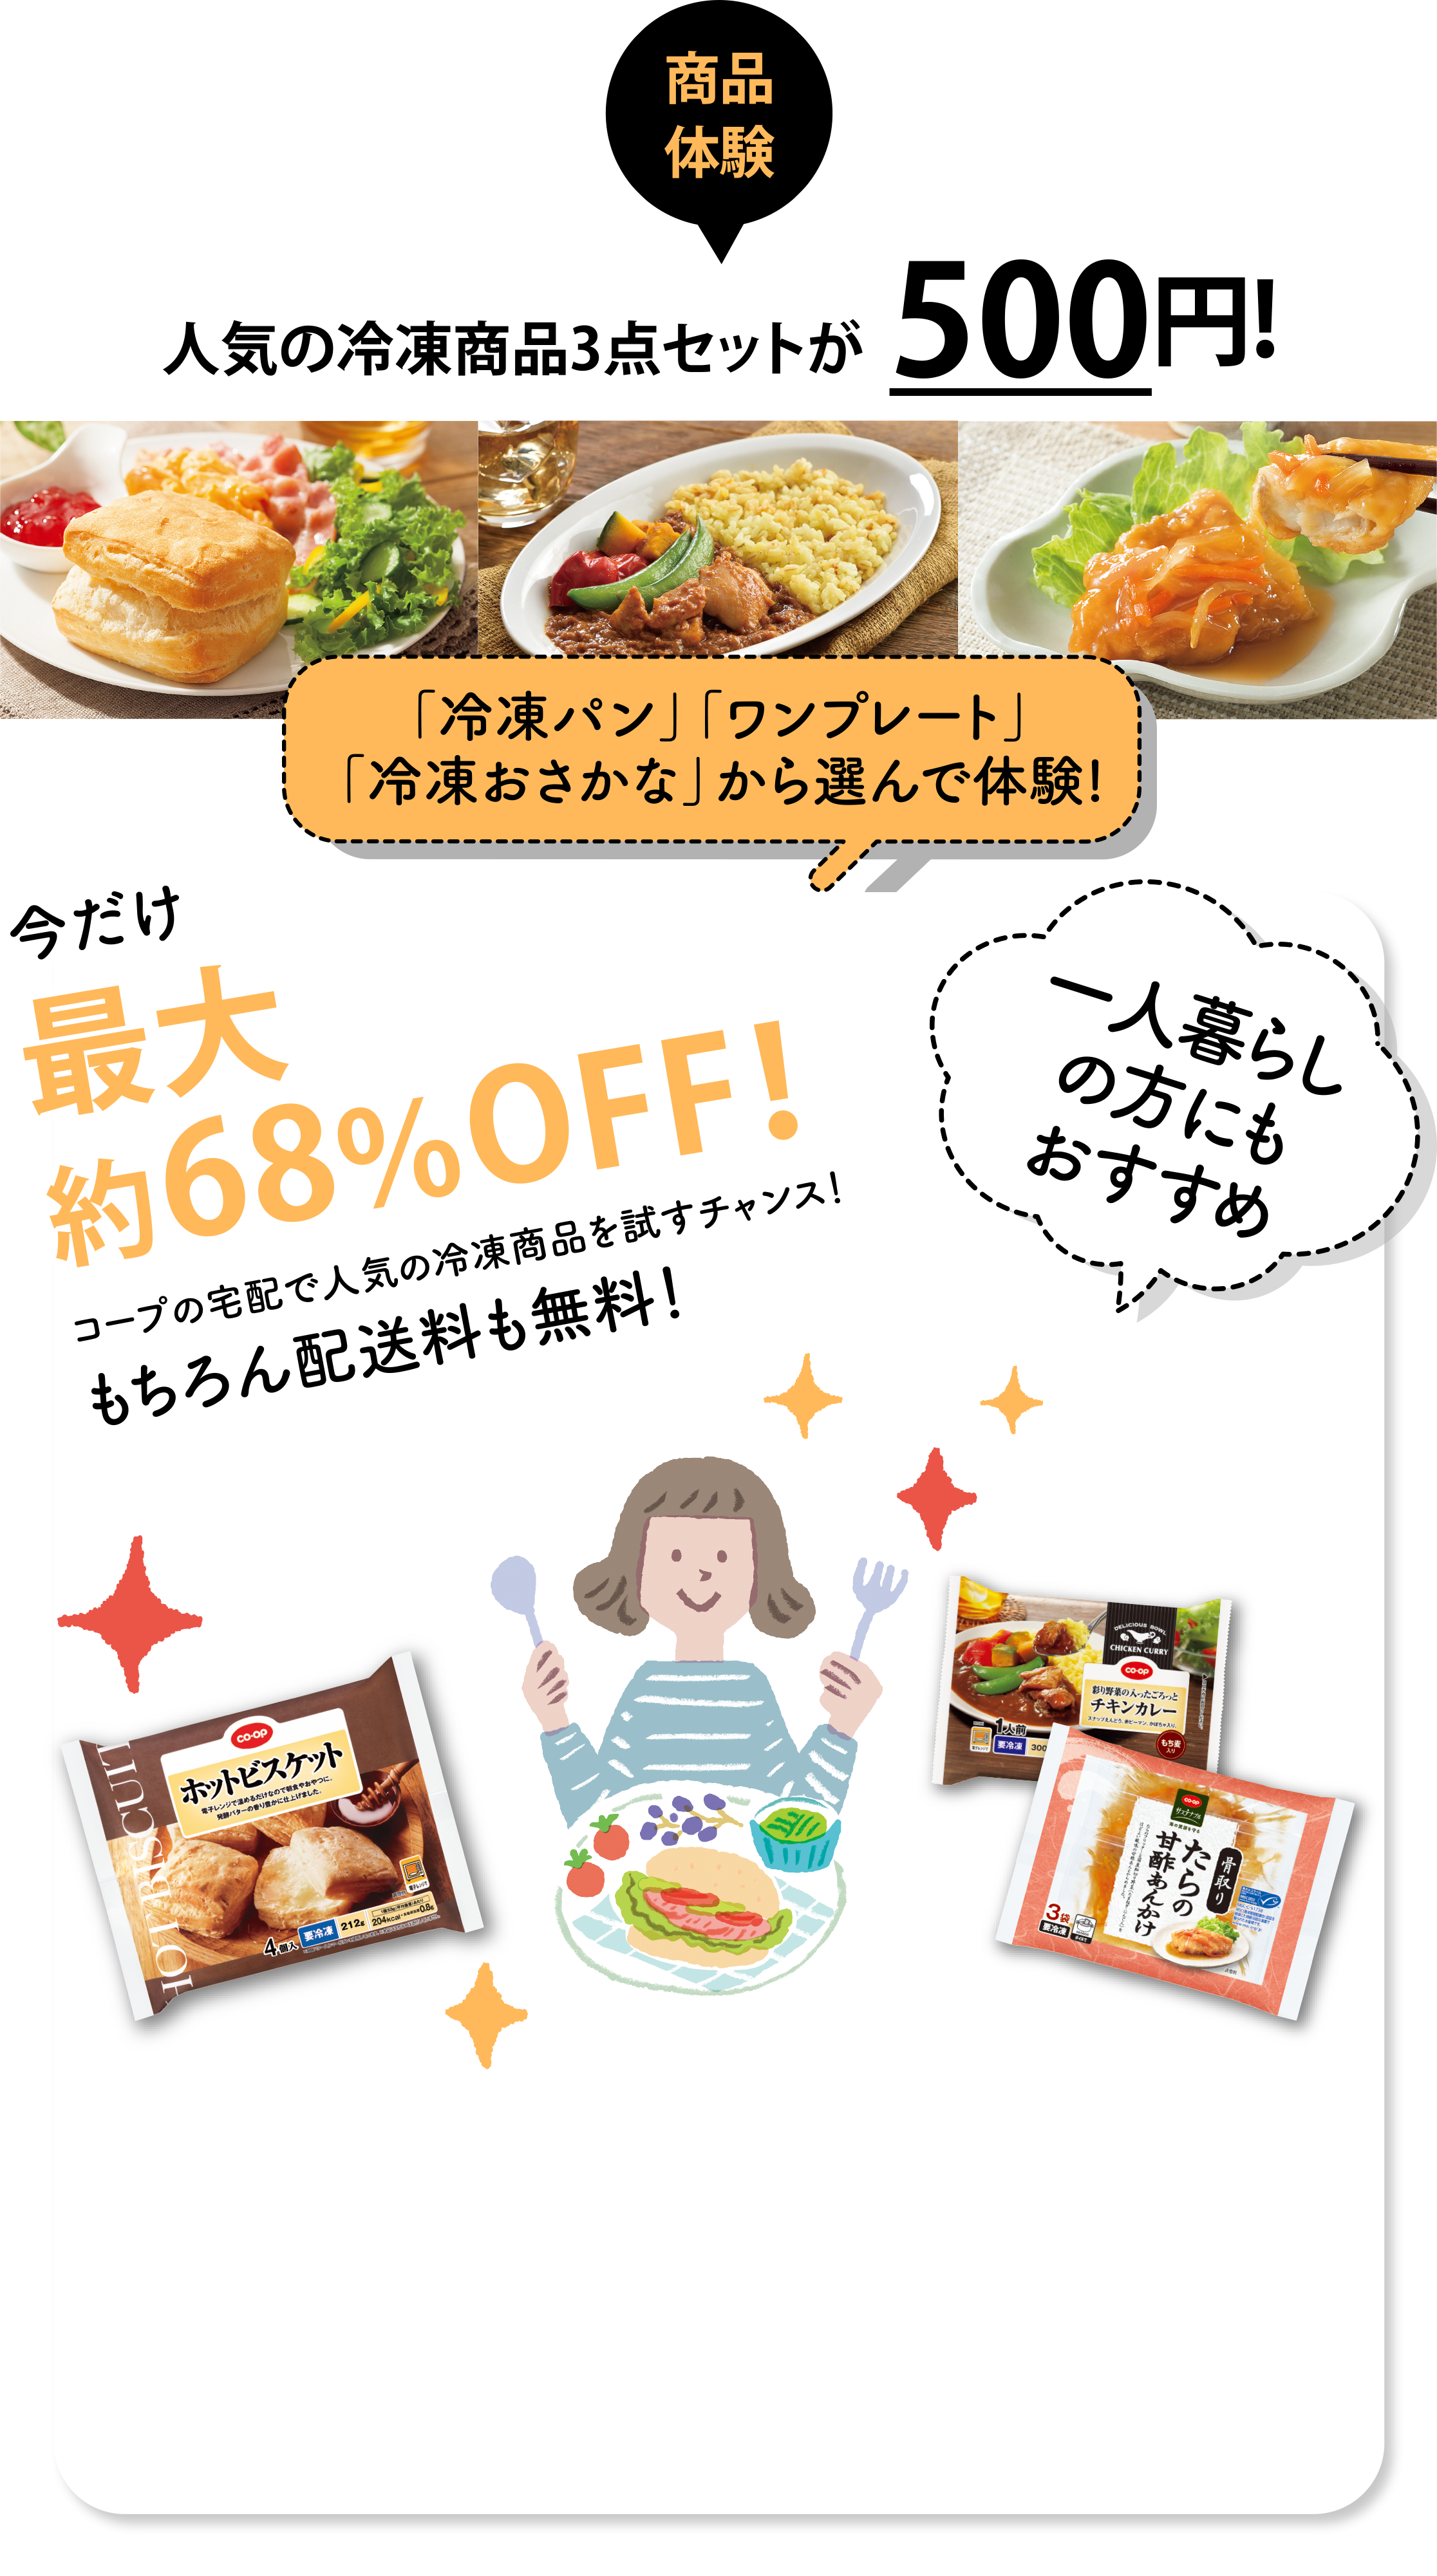 TRY COOP 人気の冷凍商品3点セットが500円!